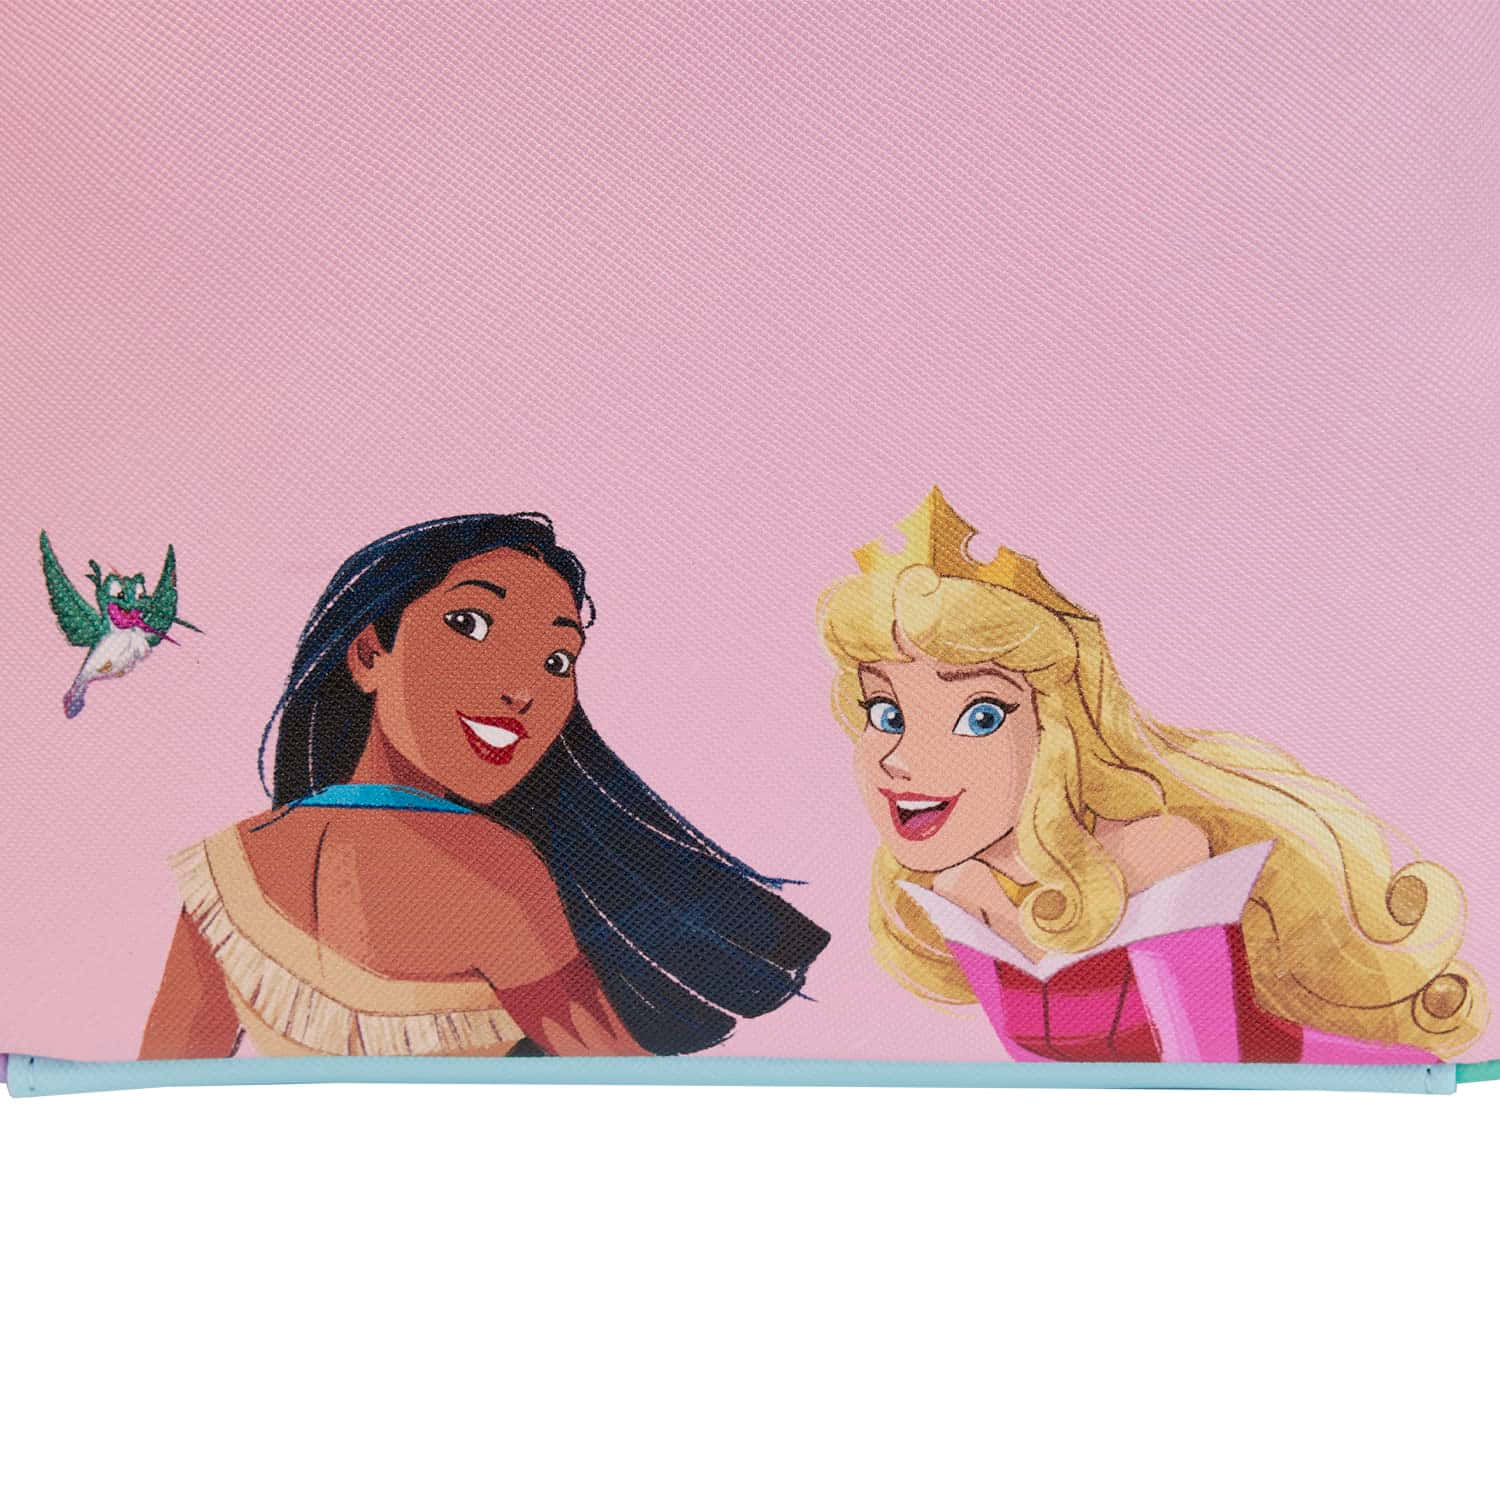 Fairytale Princesses of The Wonderful World of Disney